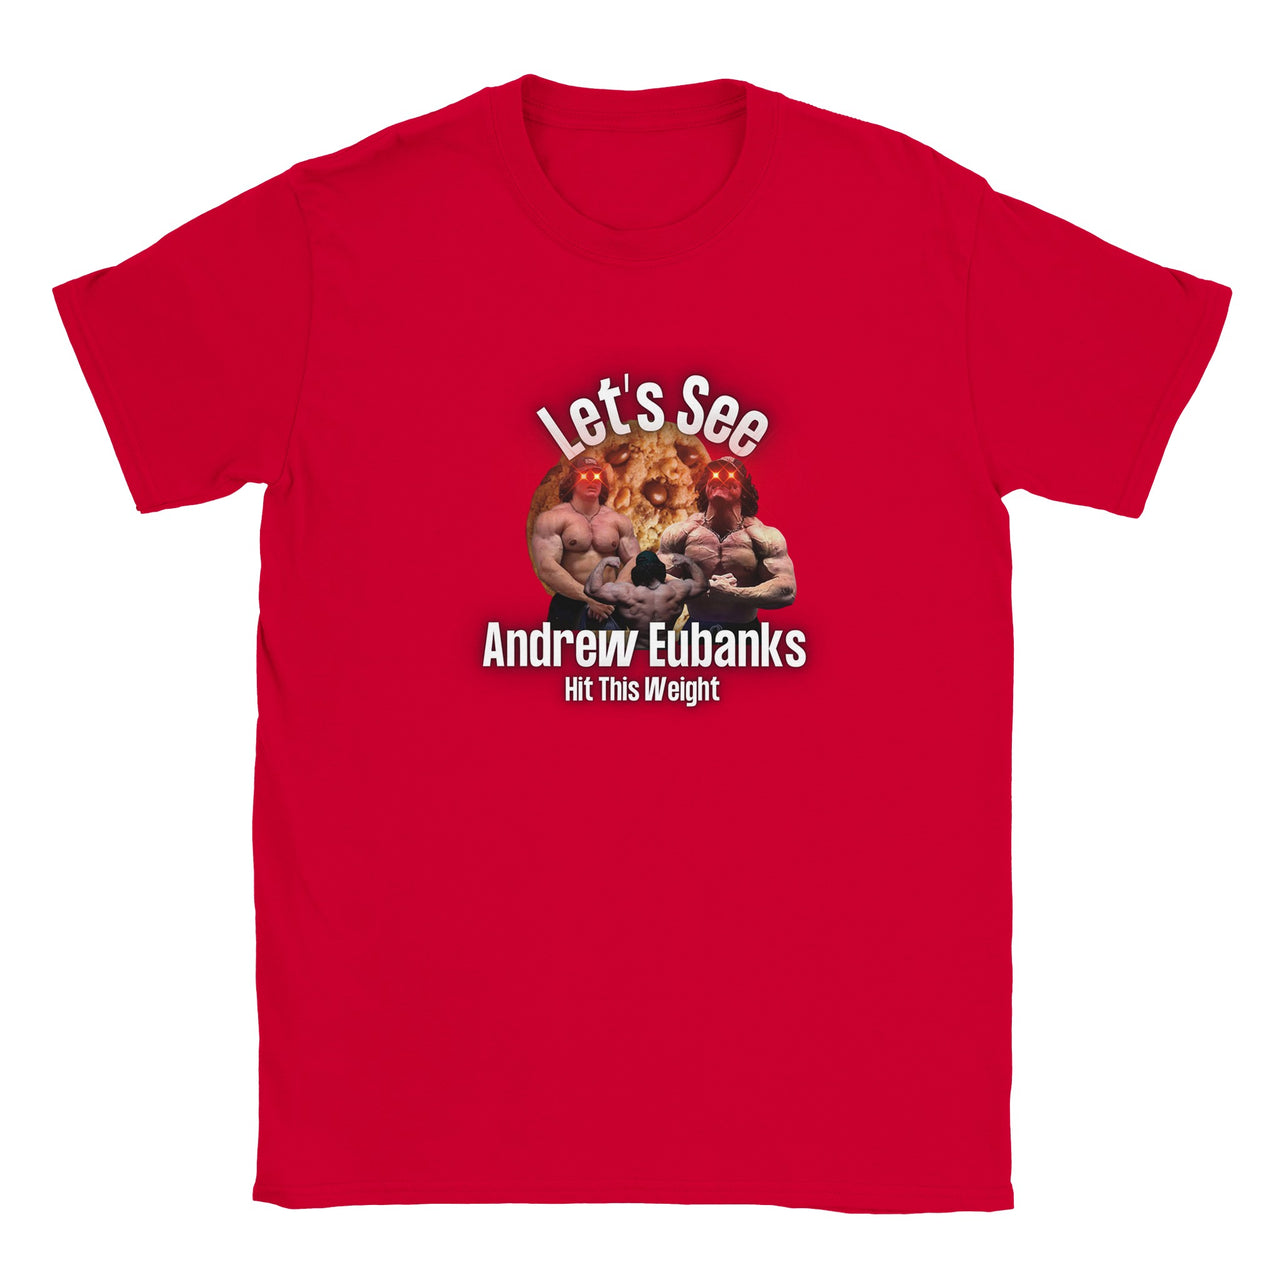 Andrew Eubanks T-shirt